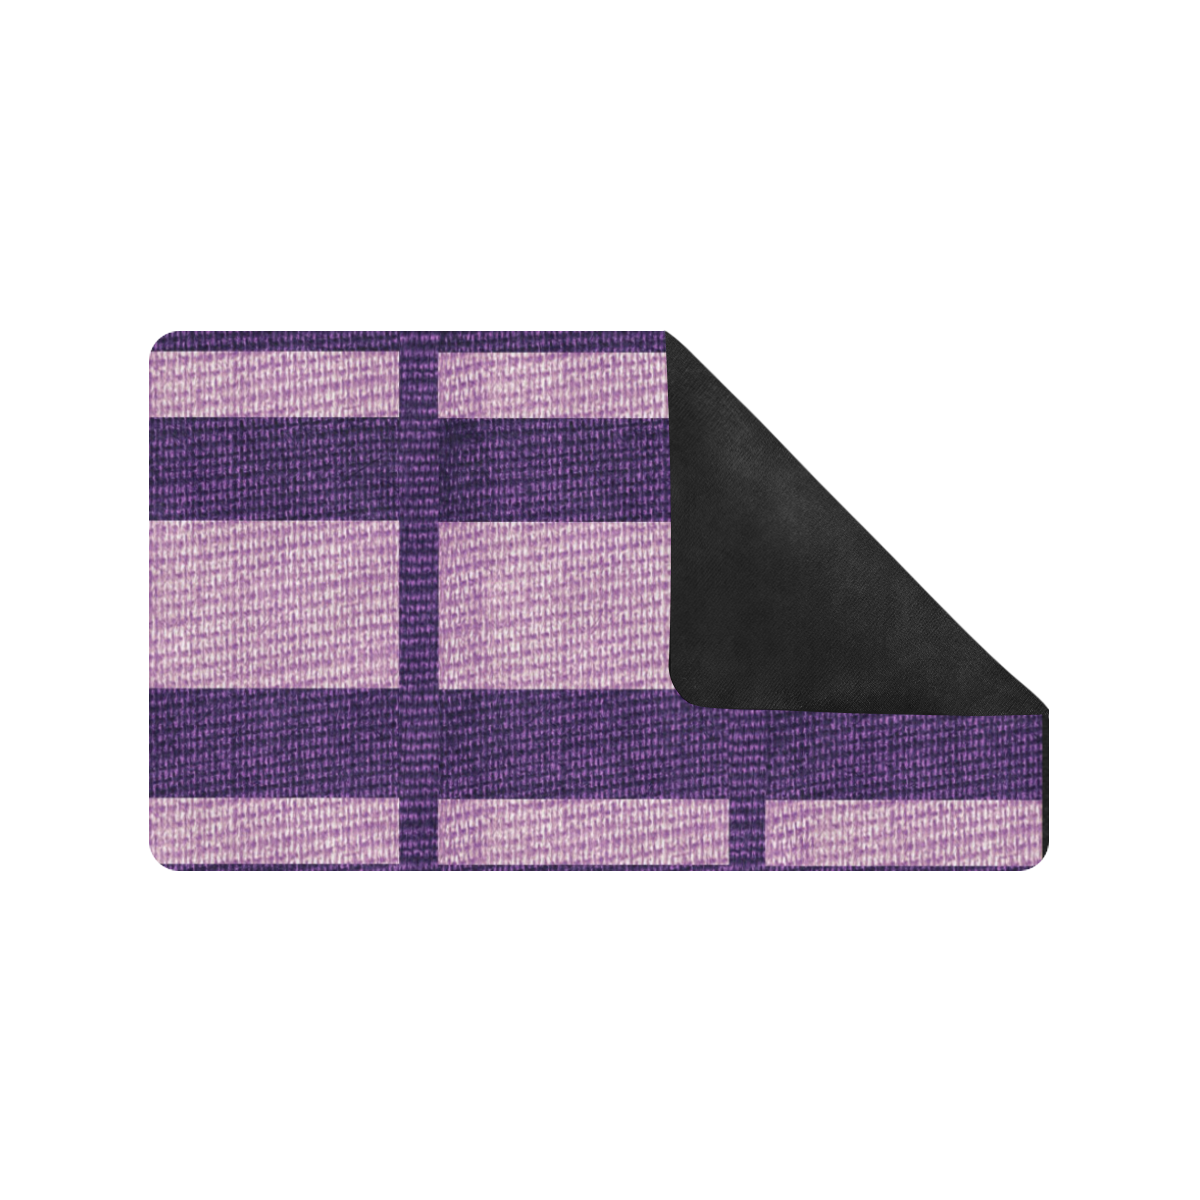 fabric-914831 Doormat 30"x18" (Black Base)